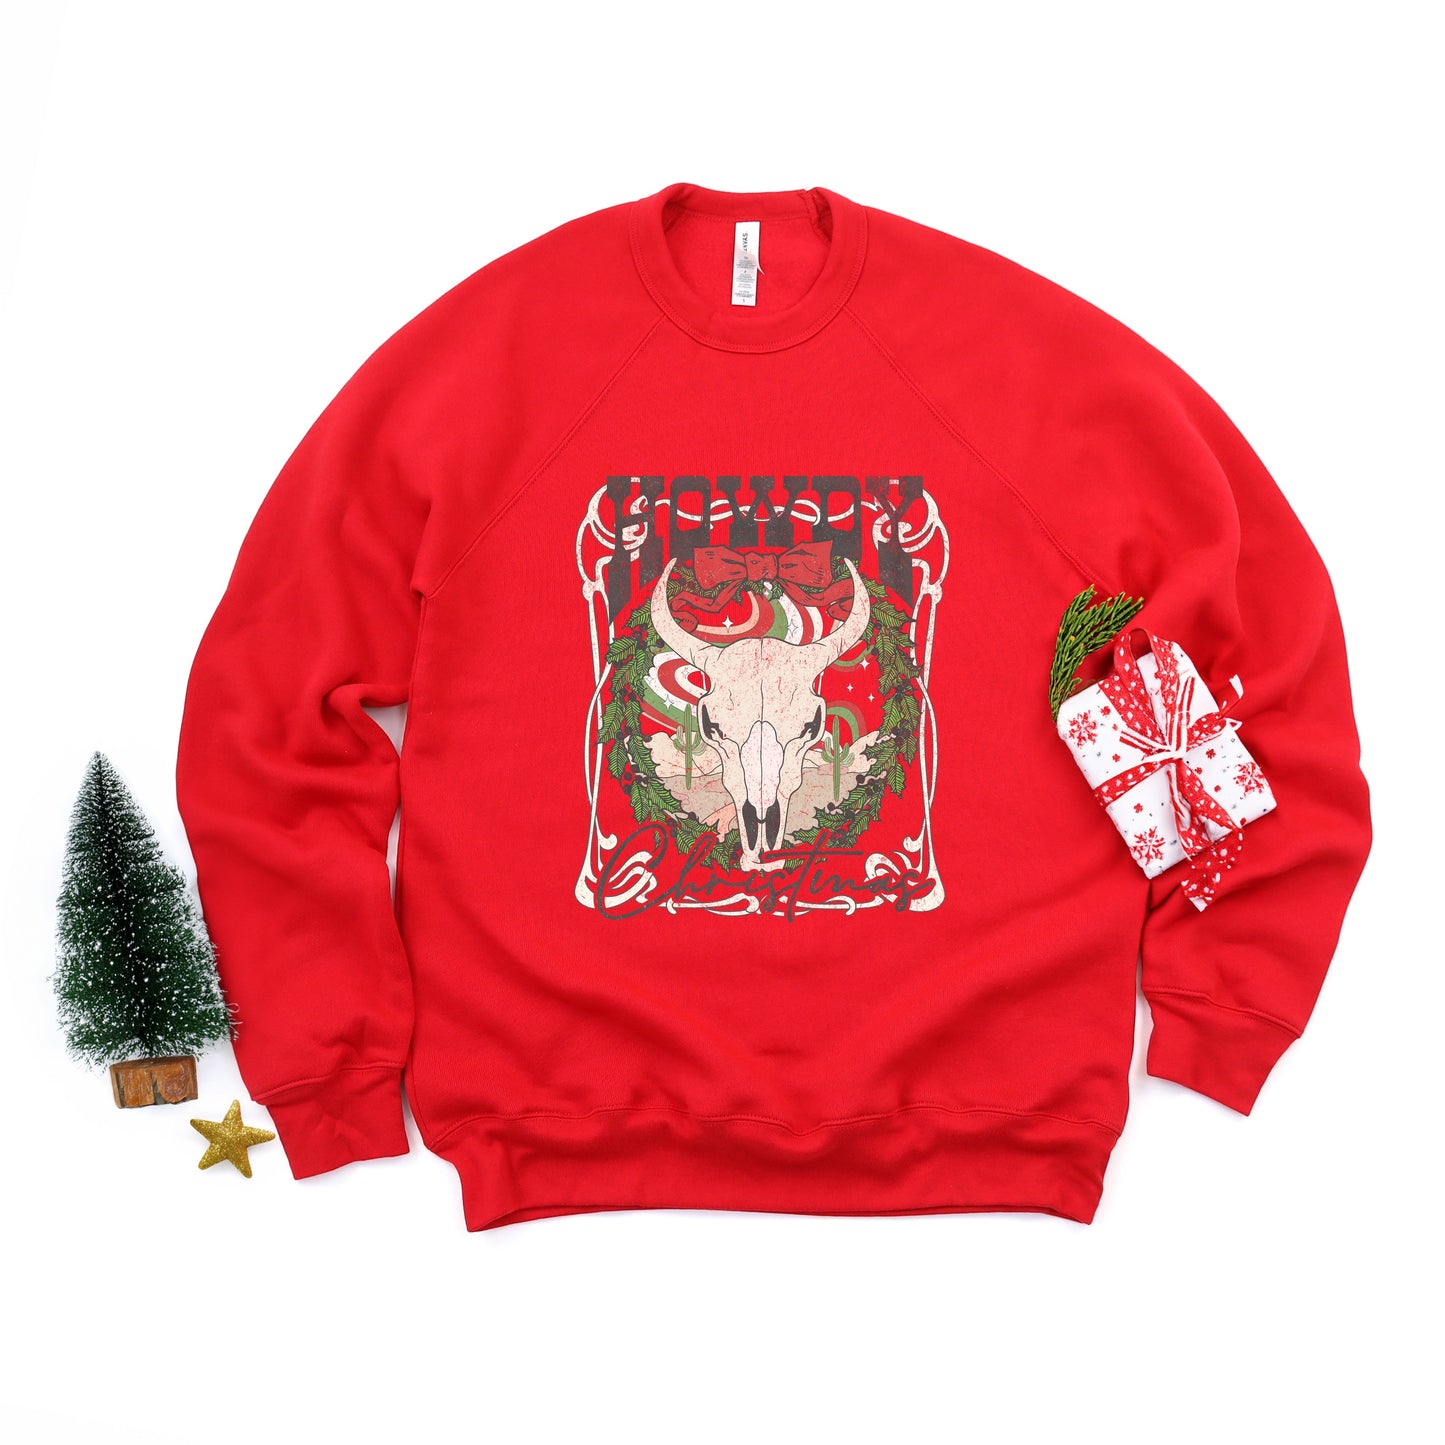 Howdy Christmas Bull | Bella Canvas Sweatshirt